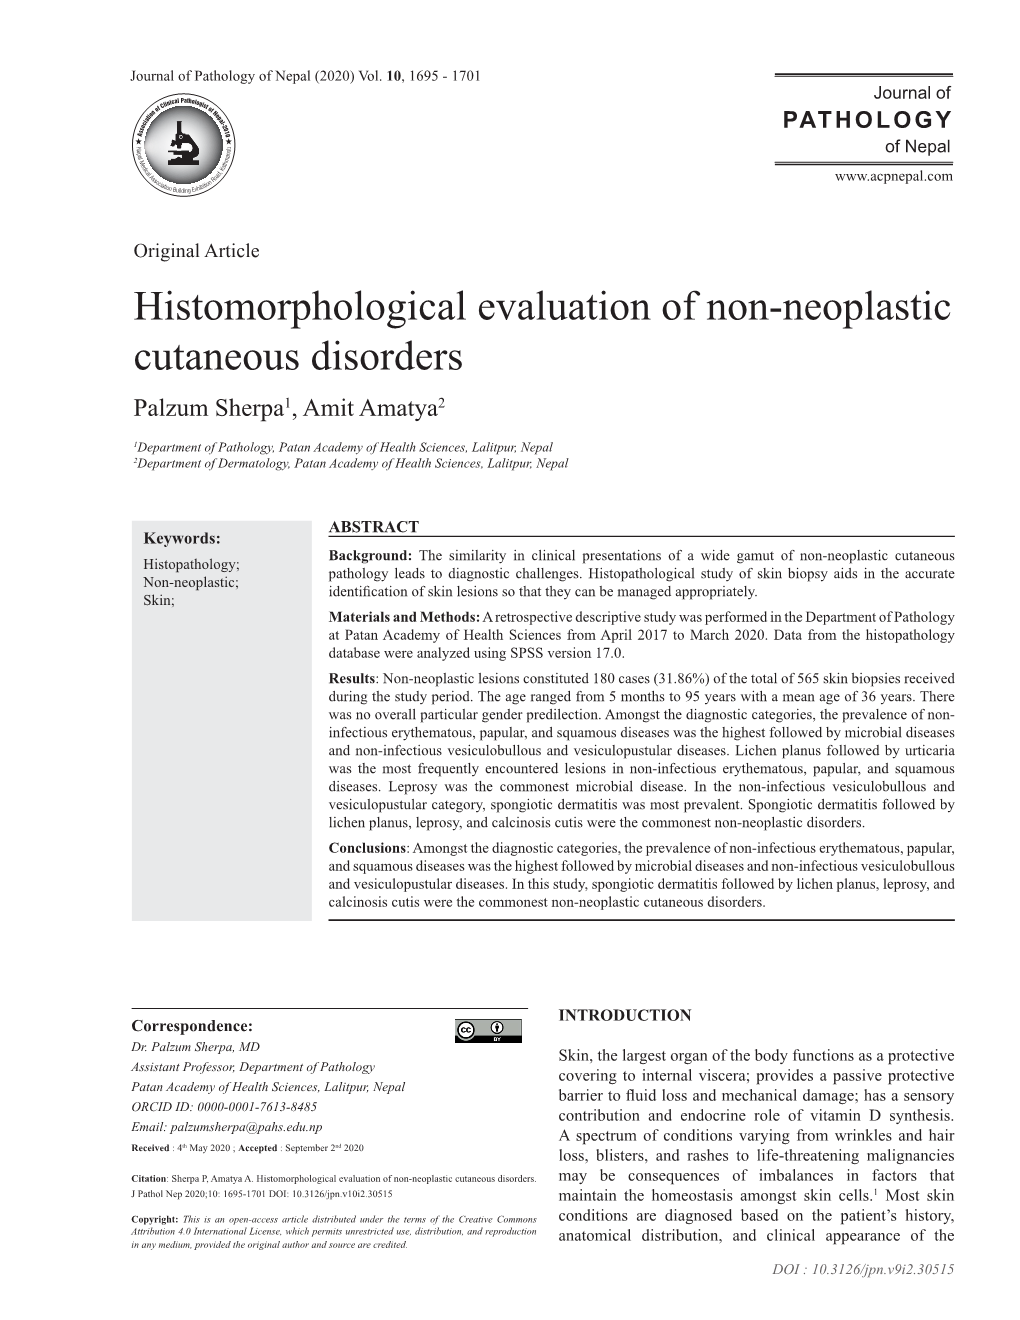 Histomorphological Evaluation of Non-Neoplastic Cutaneous Disorders Palzum Sherpa1, Amit Amatya2